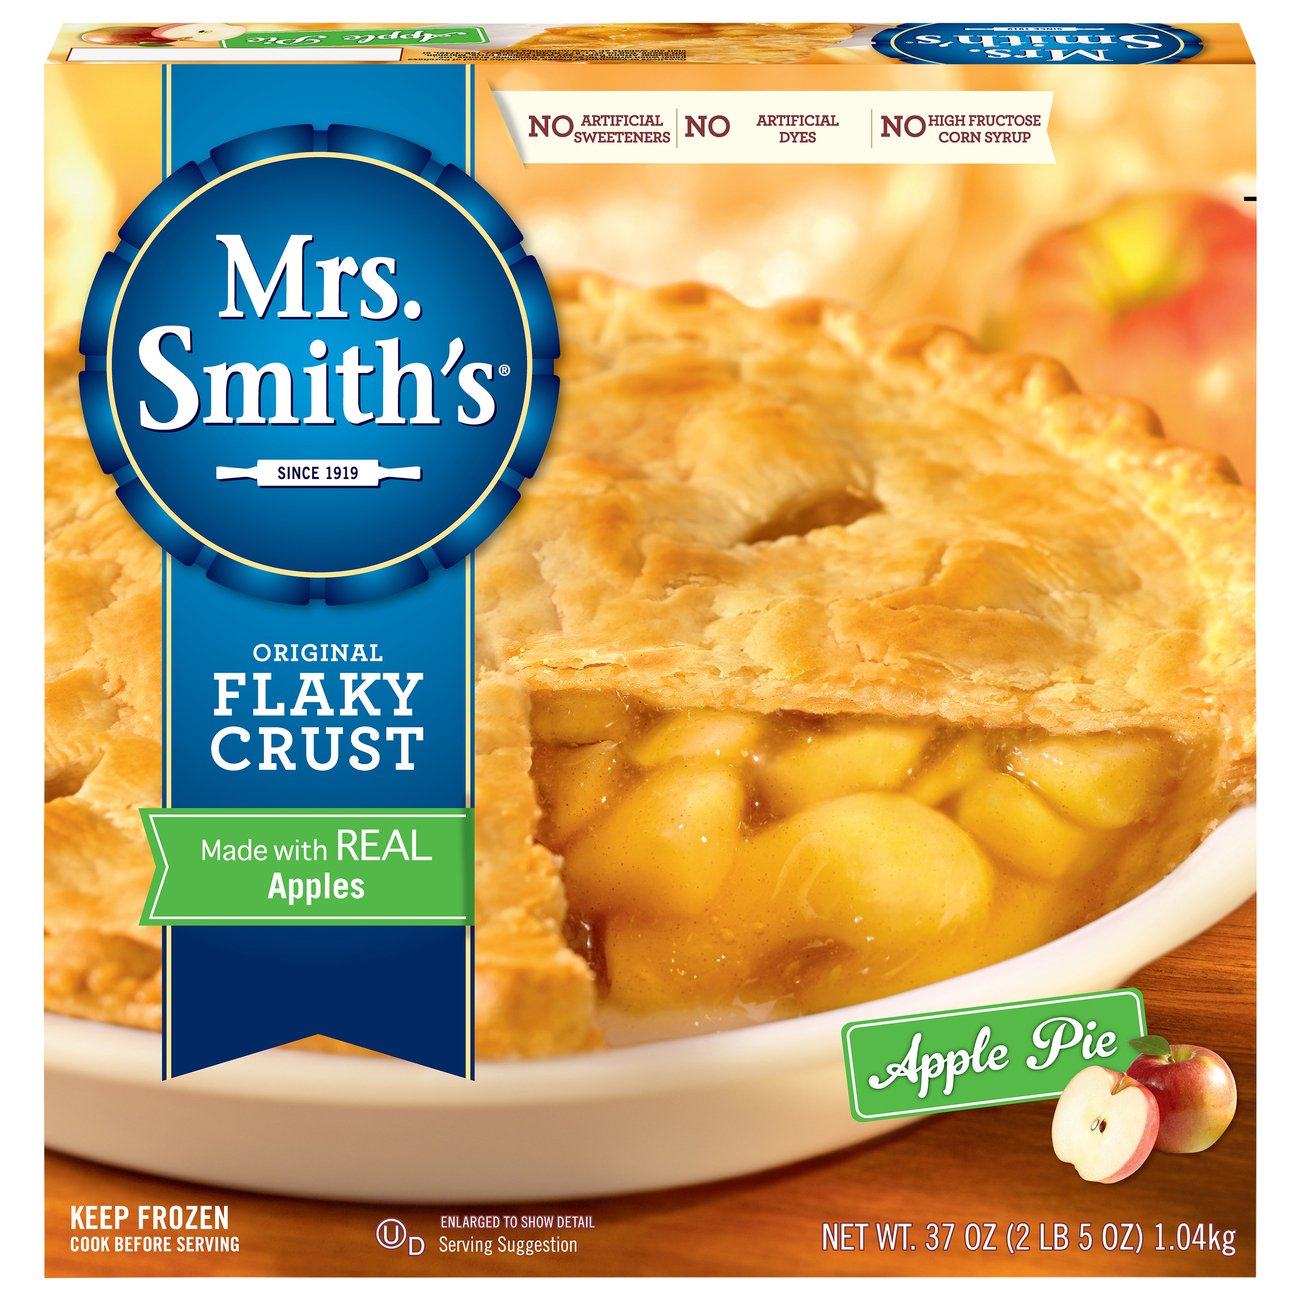 Mrs. Smith's Original Flaky Crust Apple Pie - Shop Desserts & Pastries